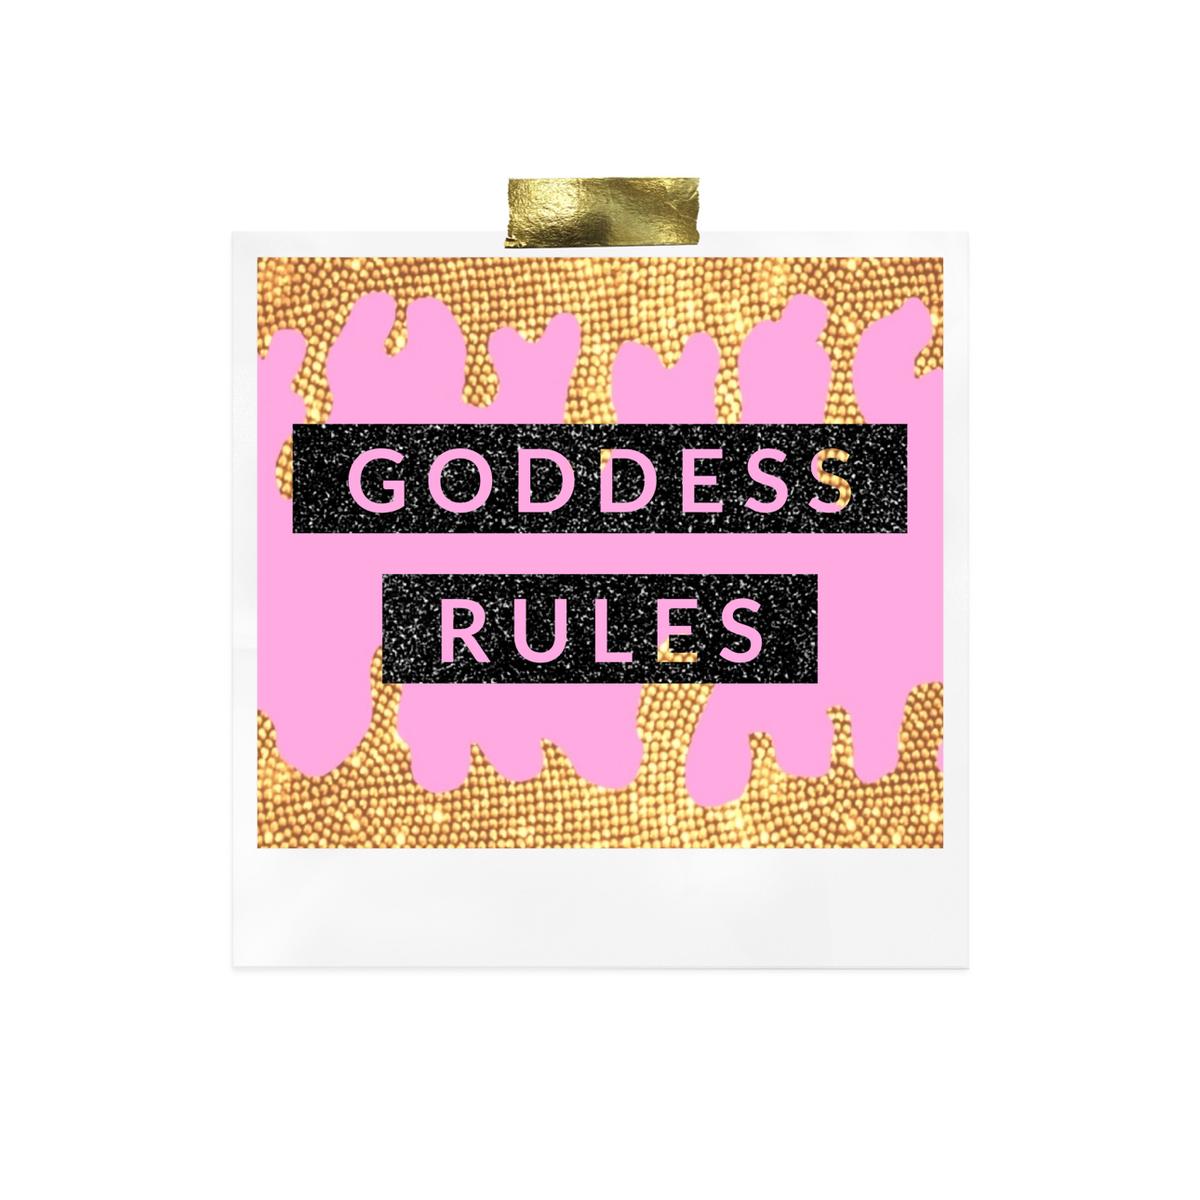 Goddess Rules's images